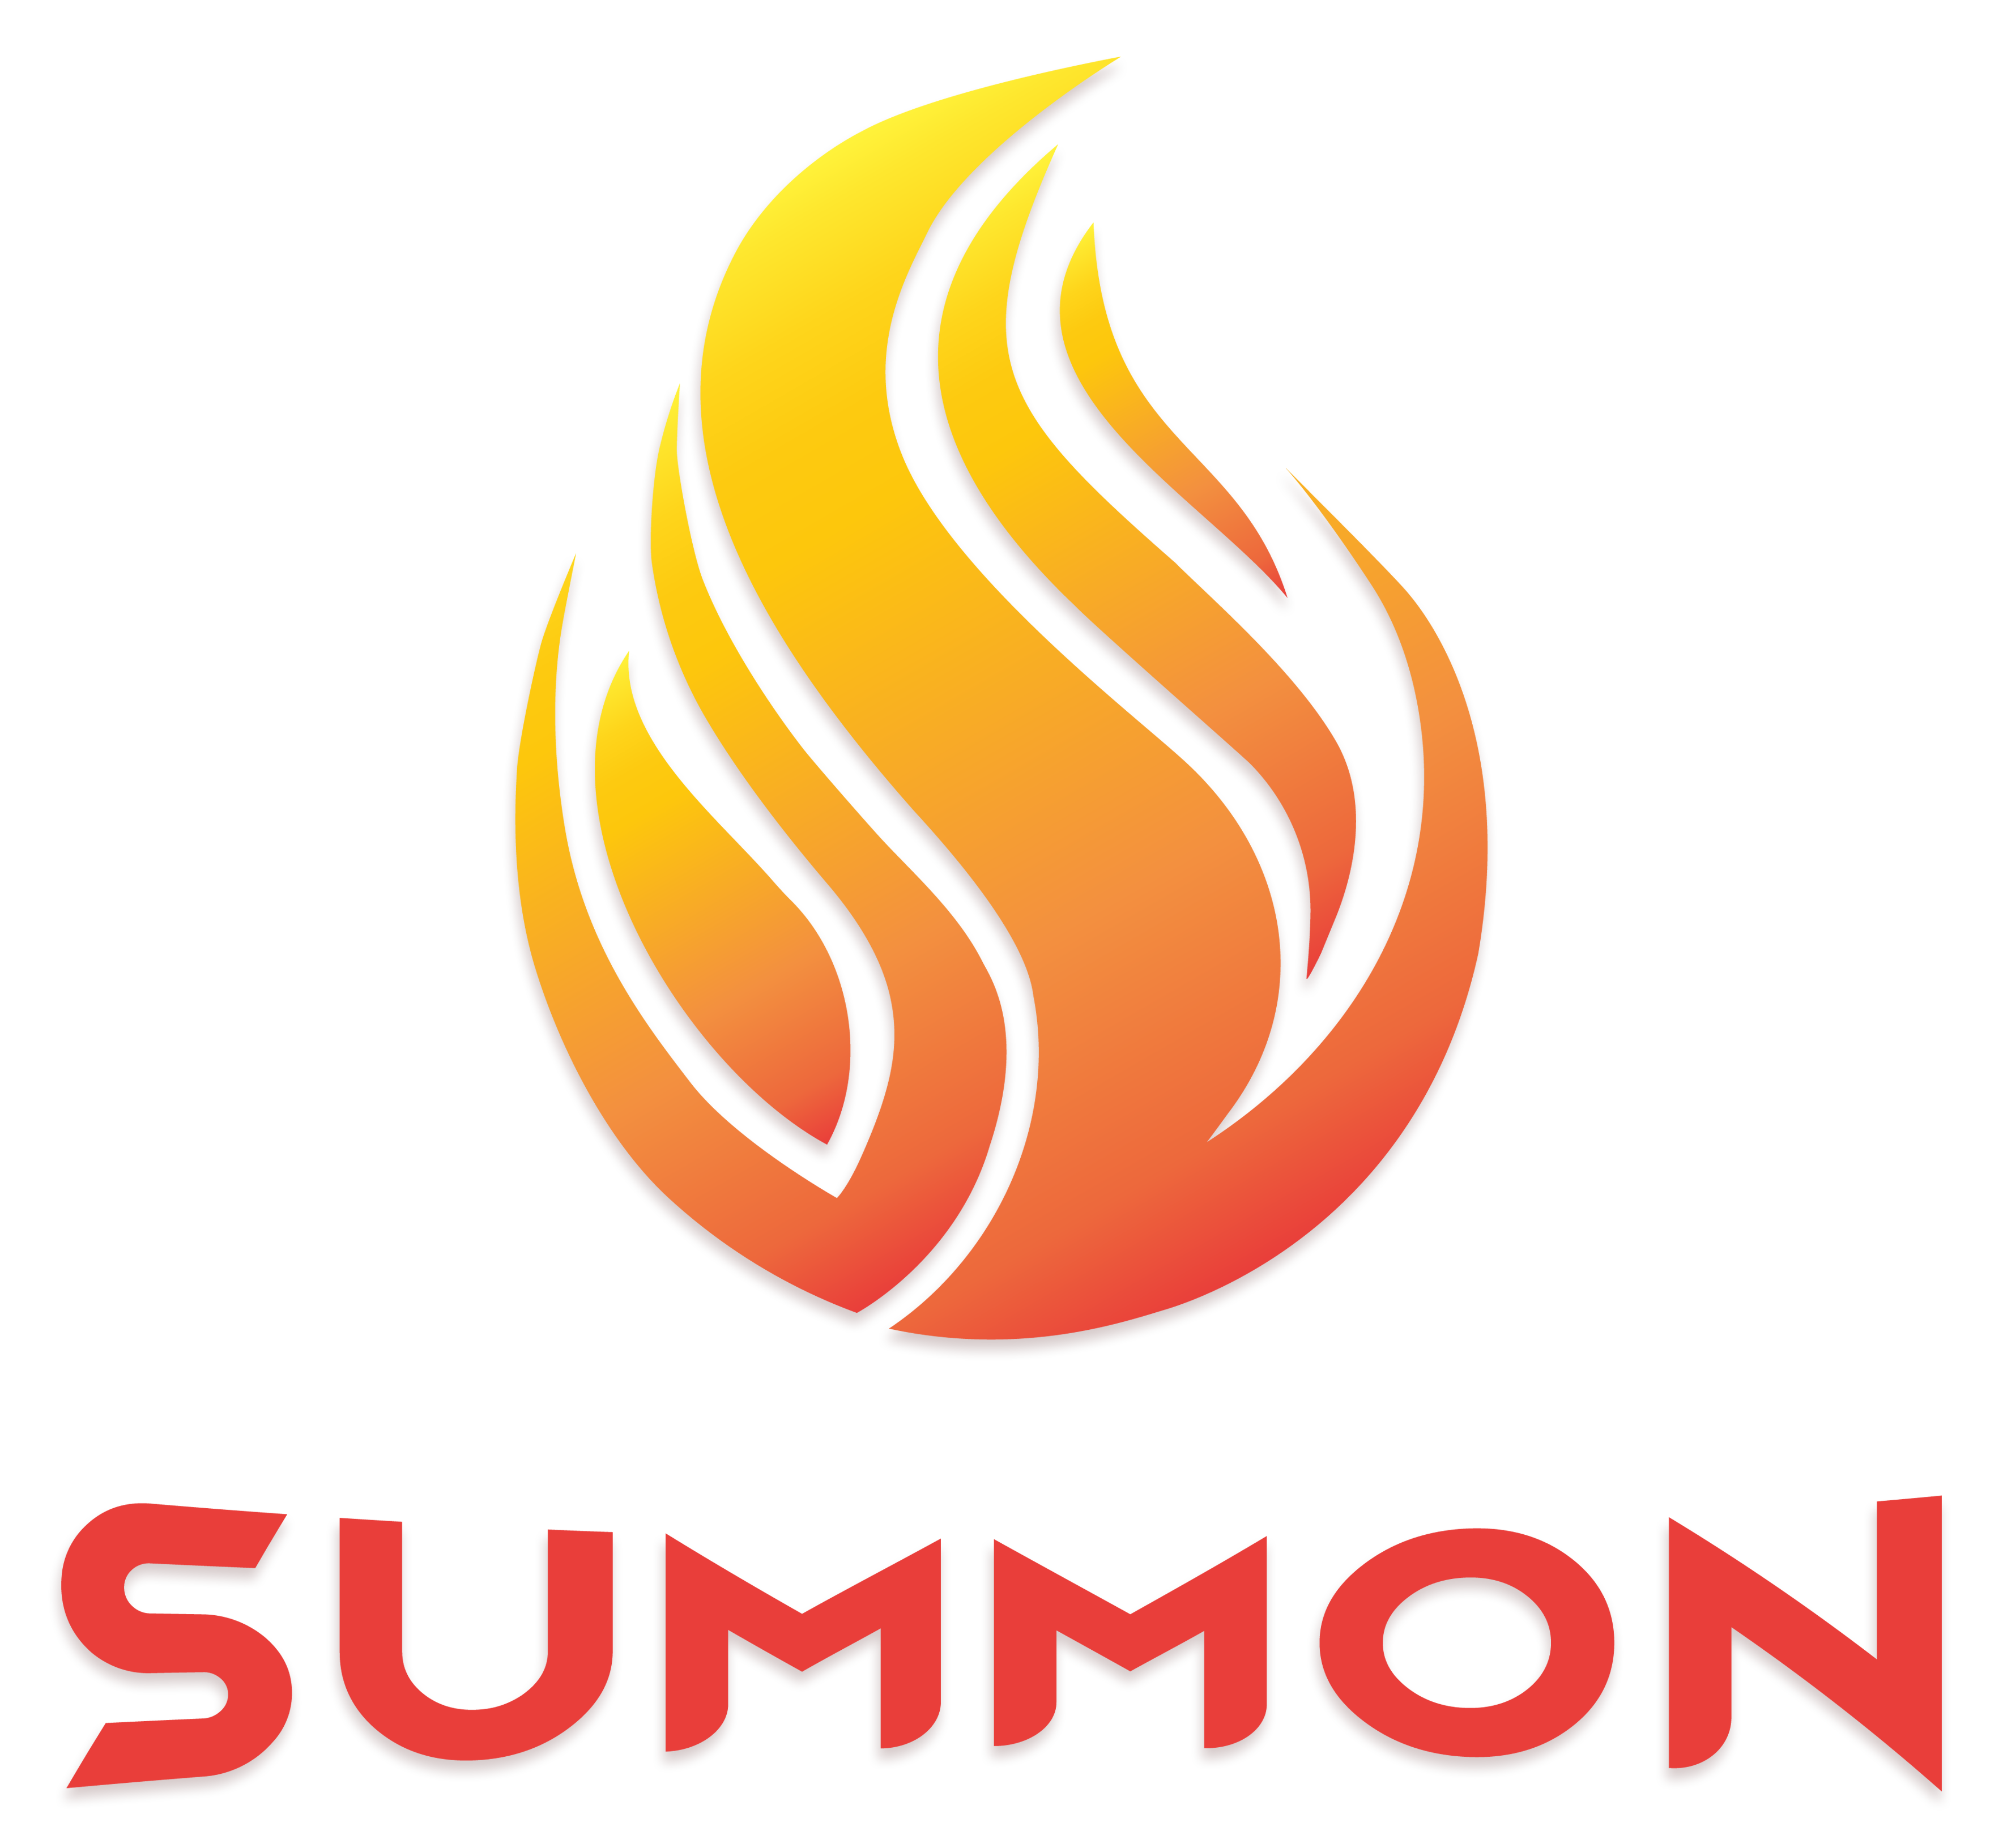 Summon Logo with drop shadow